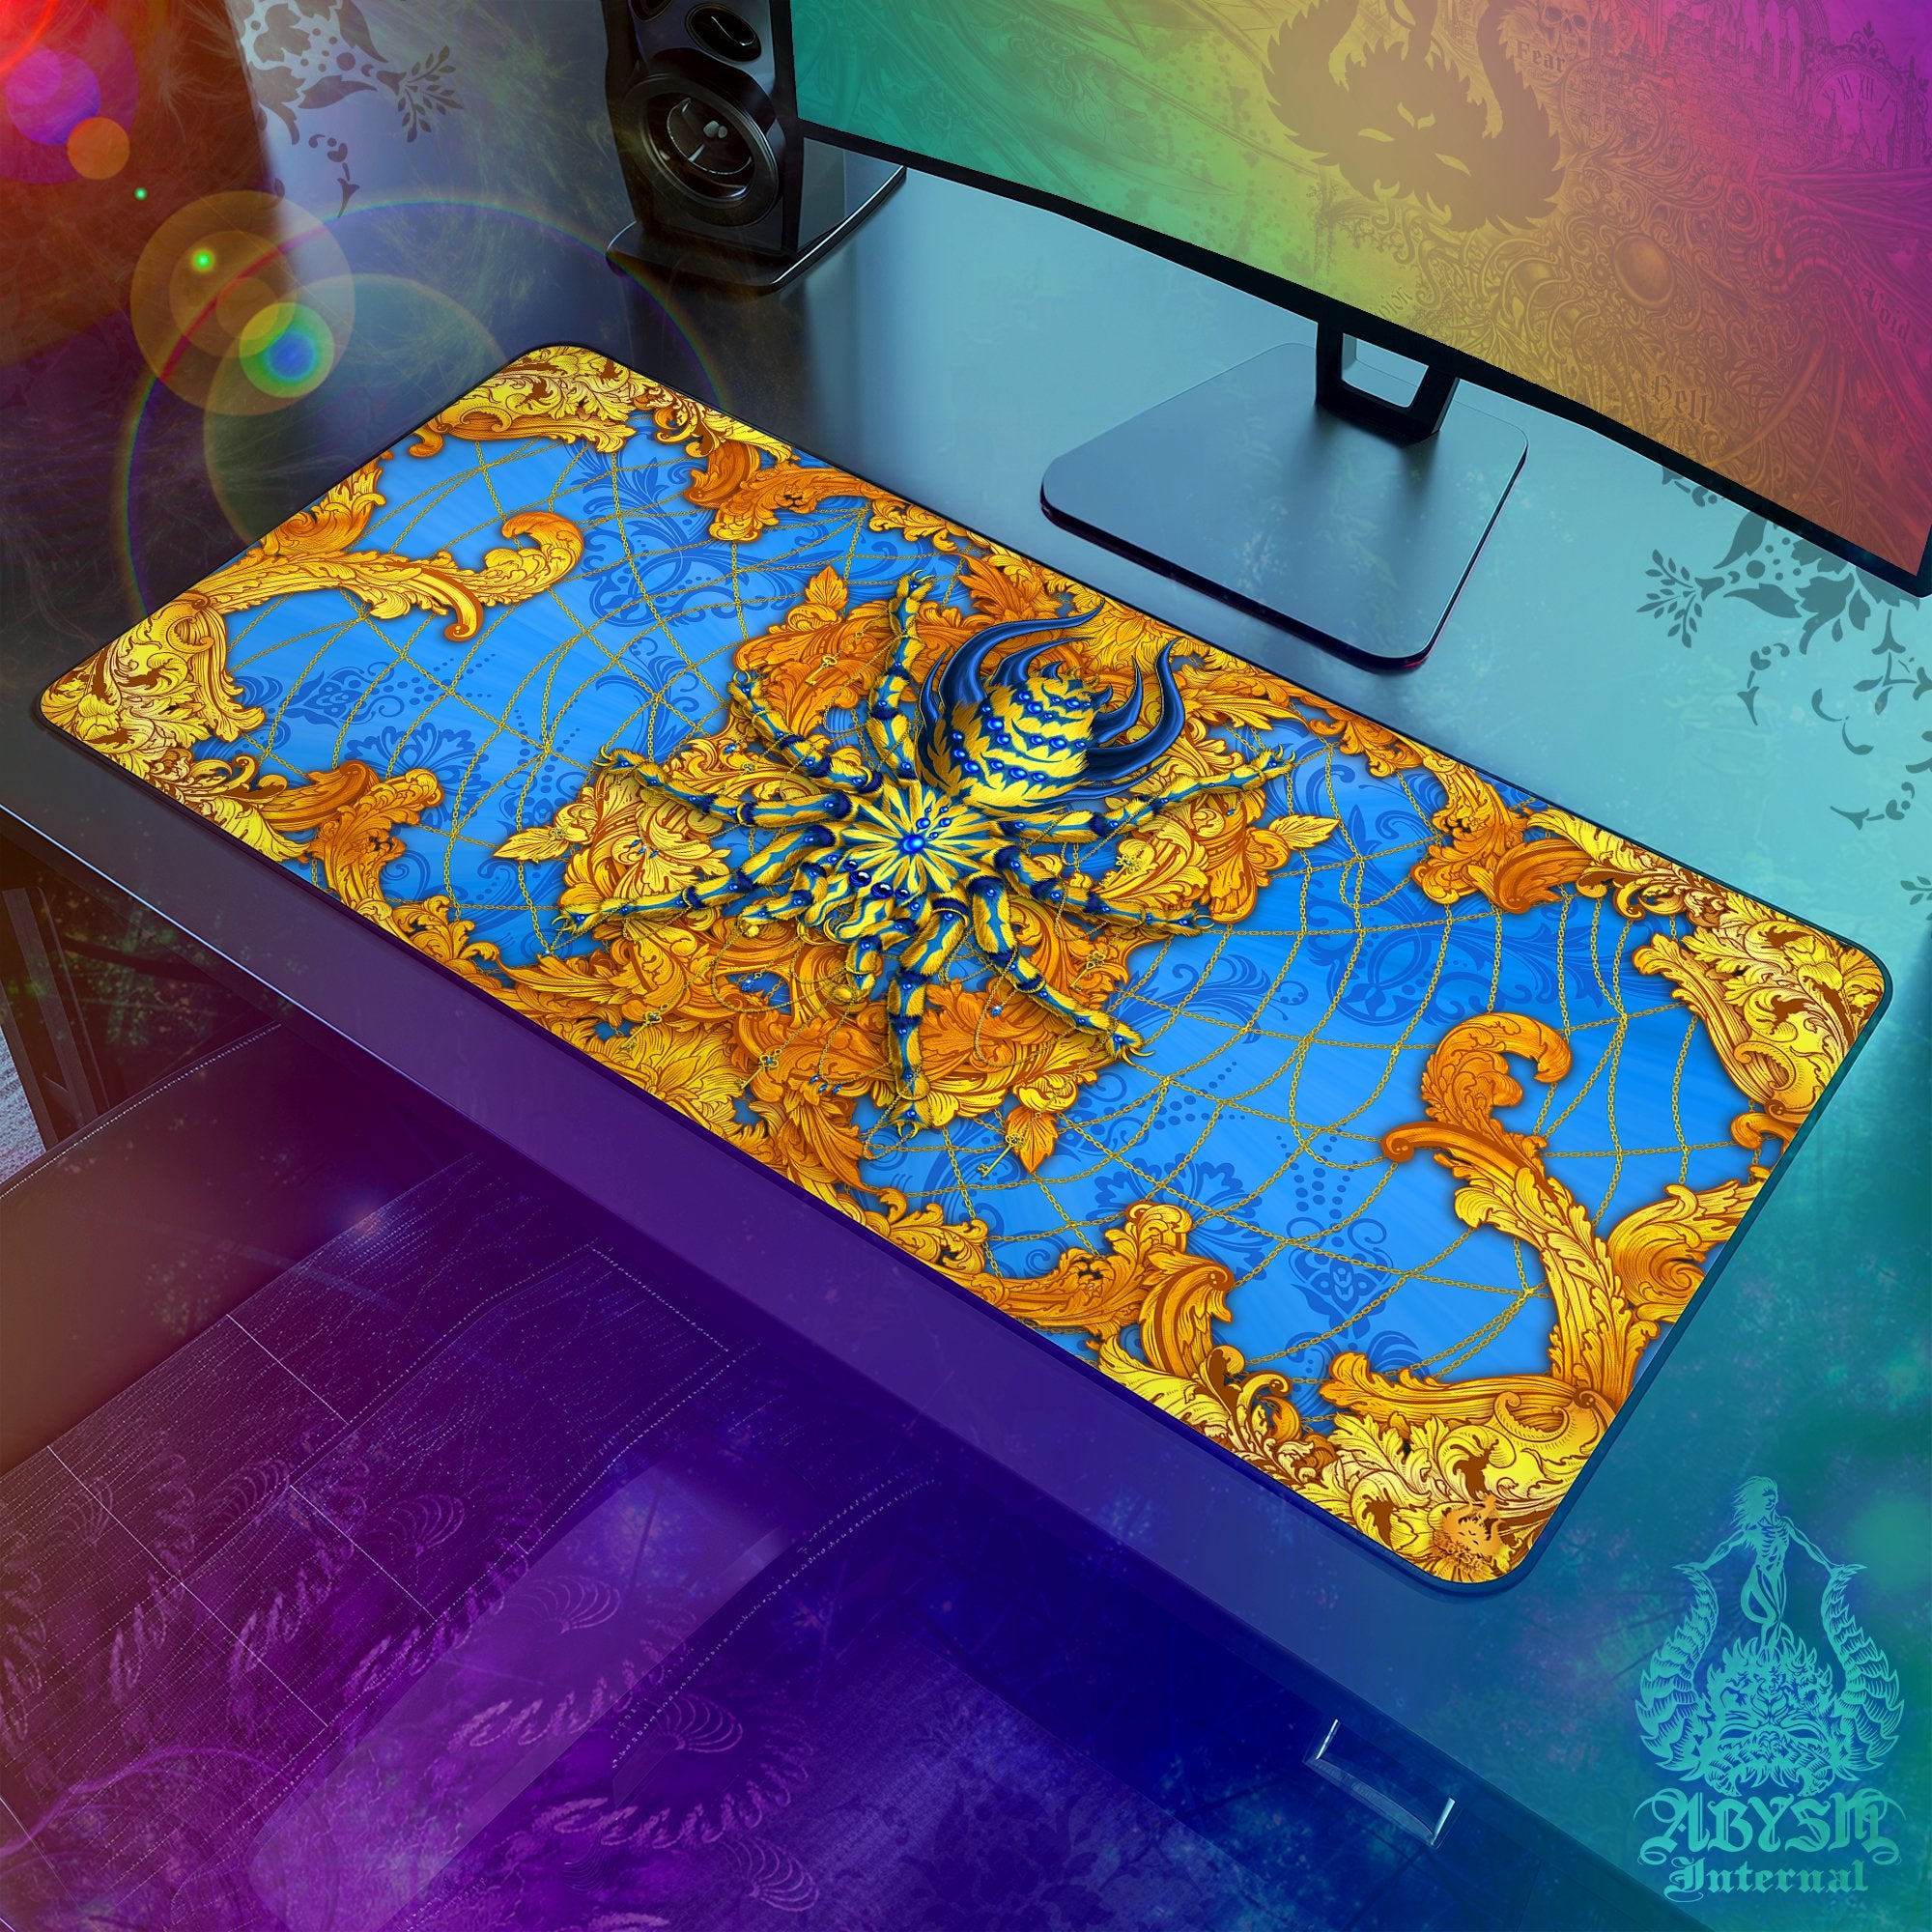 Spider Mouse Pad, Tarantula Gaming Desk Mat, Cyan Gold Workpad, Gamer Table Protector Cover, Art Print - Abysm Internal